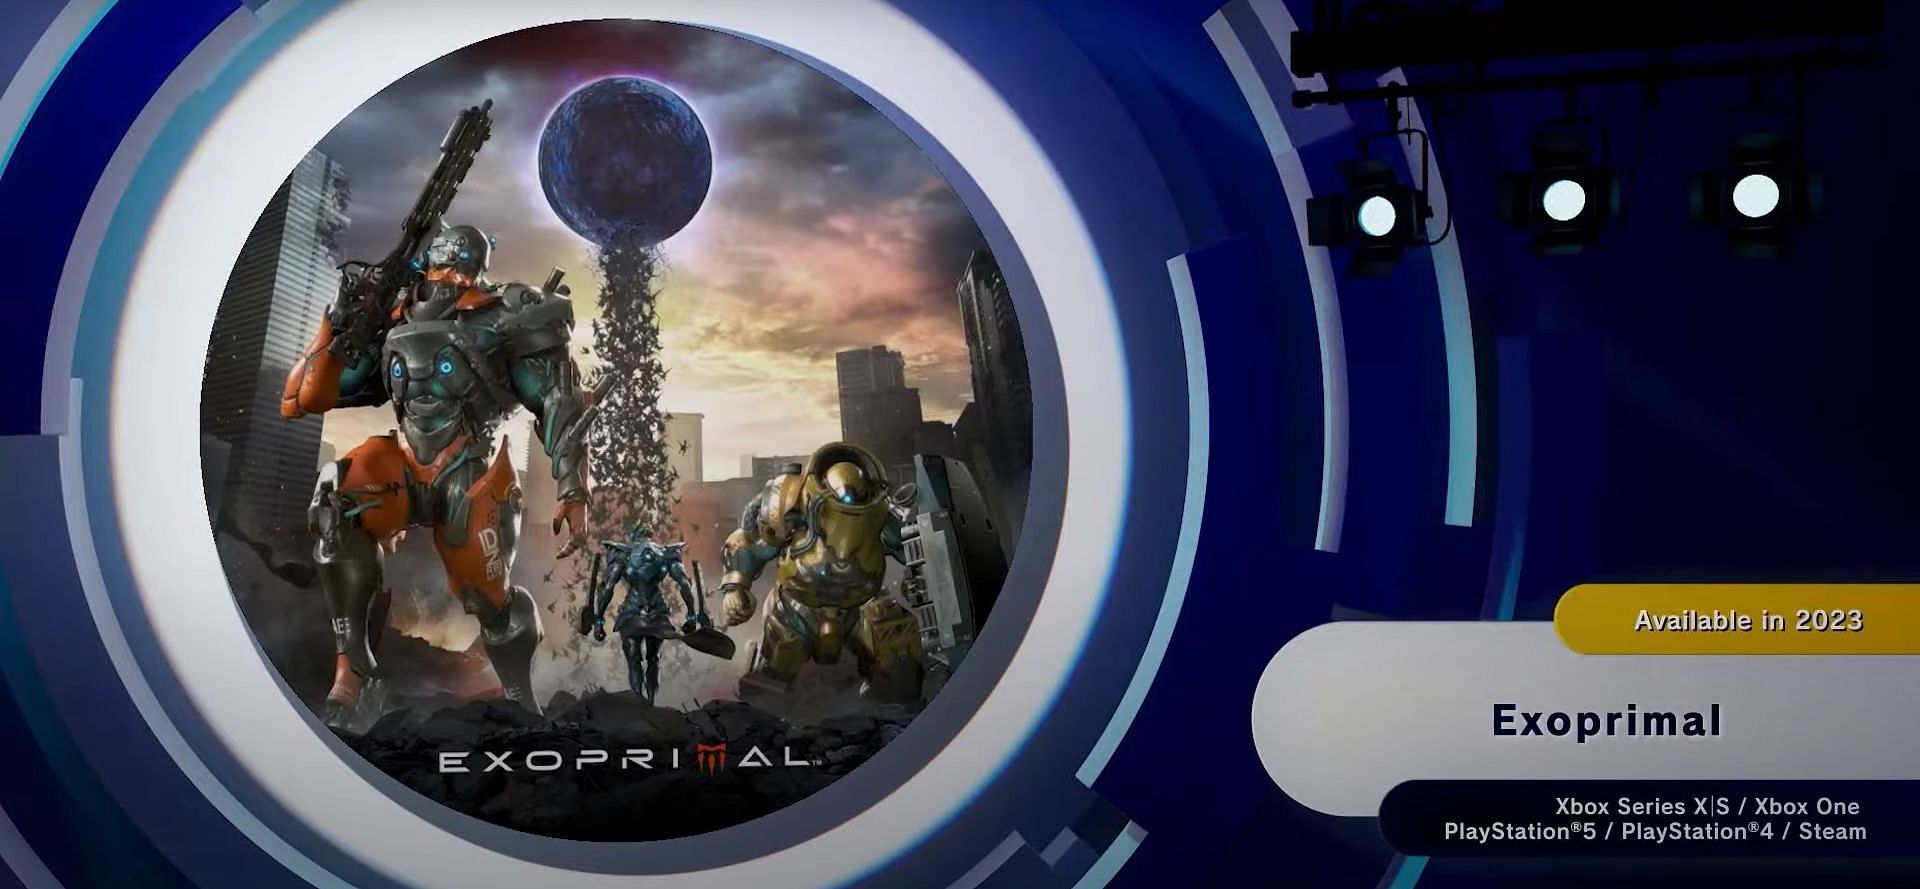 Exoprimal launches July 14th (Image via Capcom Spotlight)